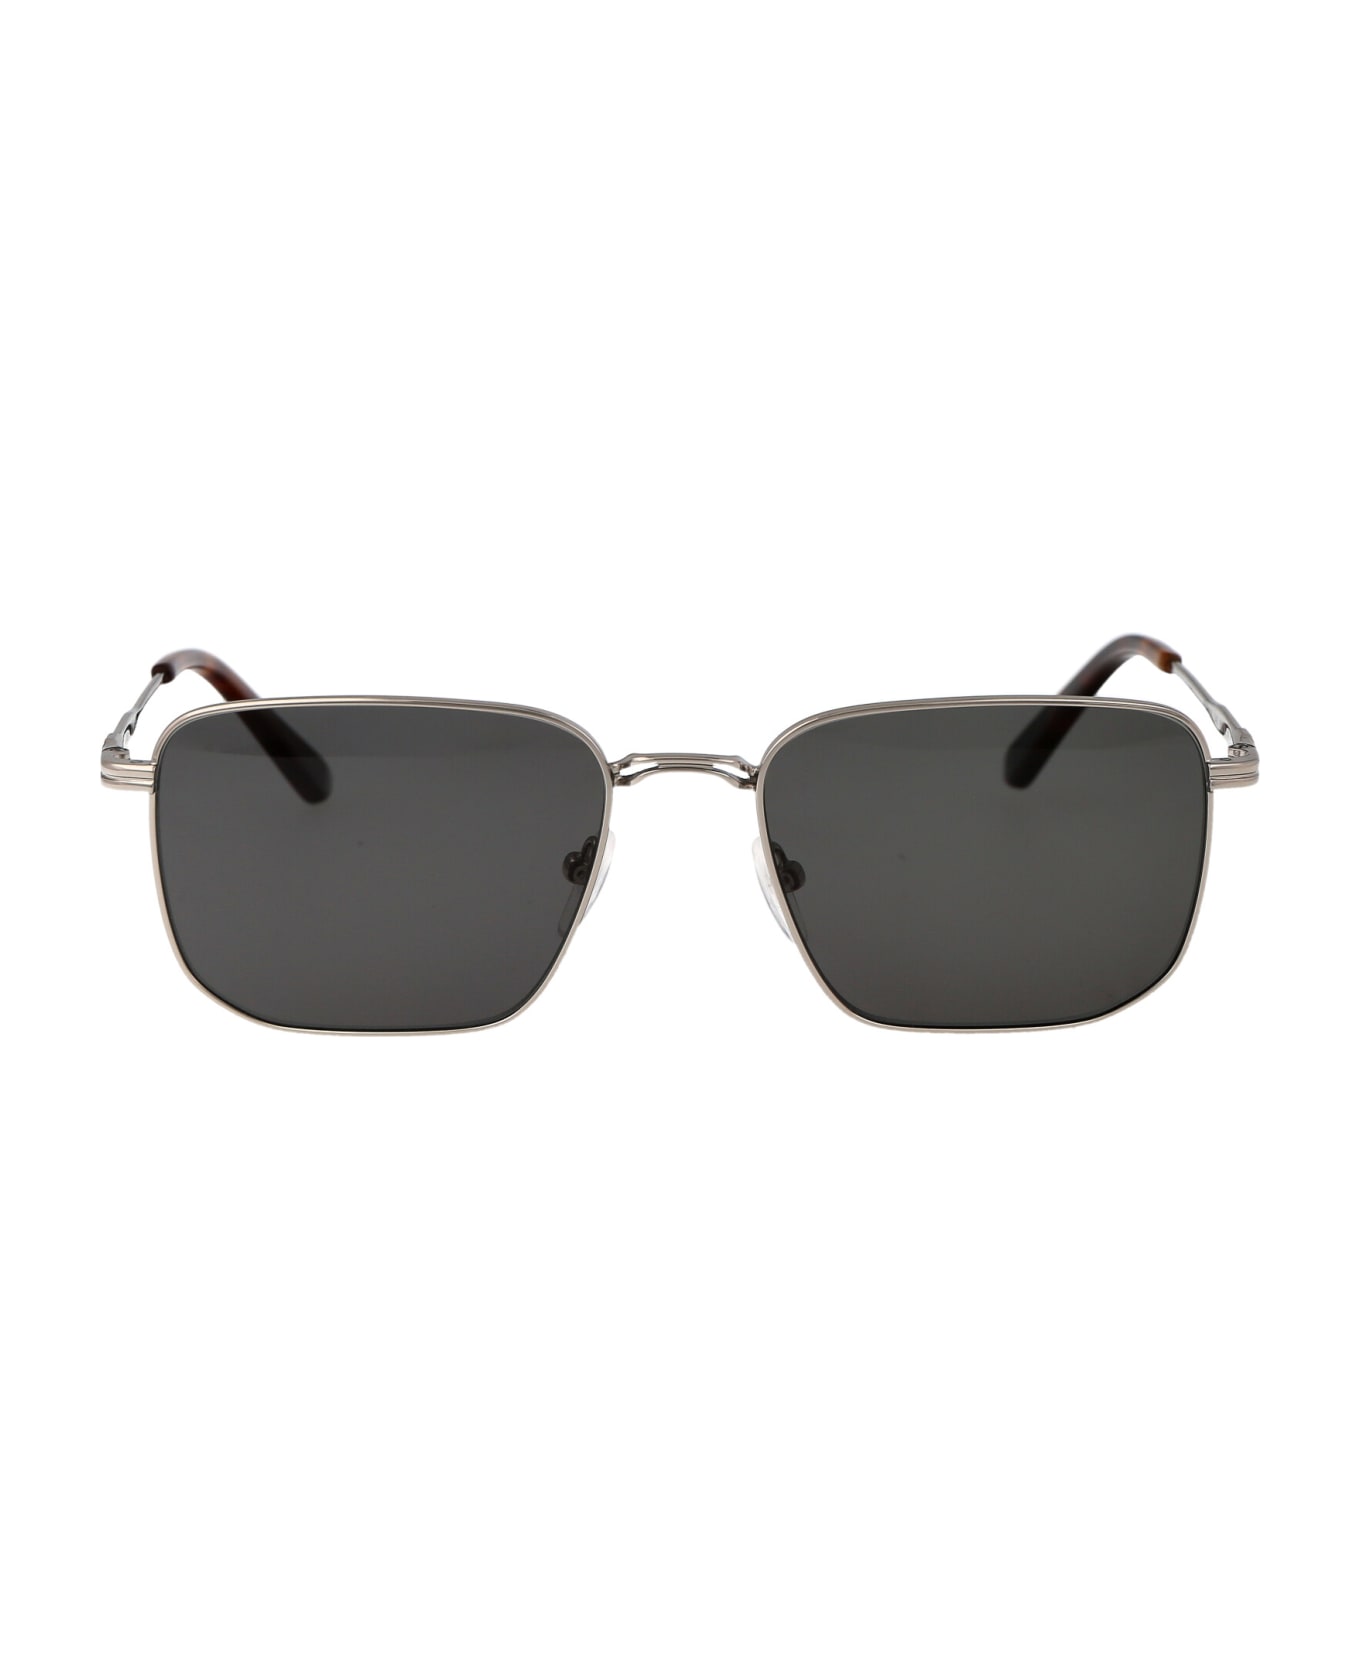 Calvin Klein Ck23101s Sunglasses - 045 SILVER